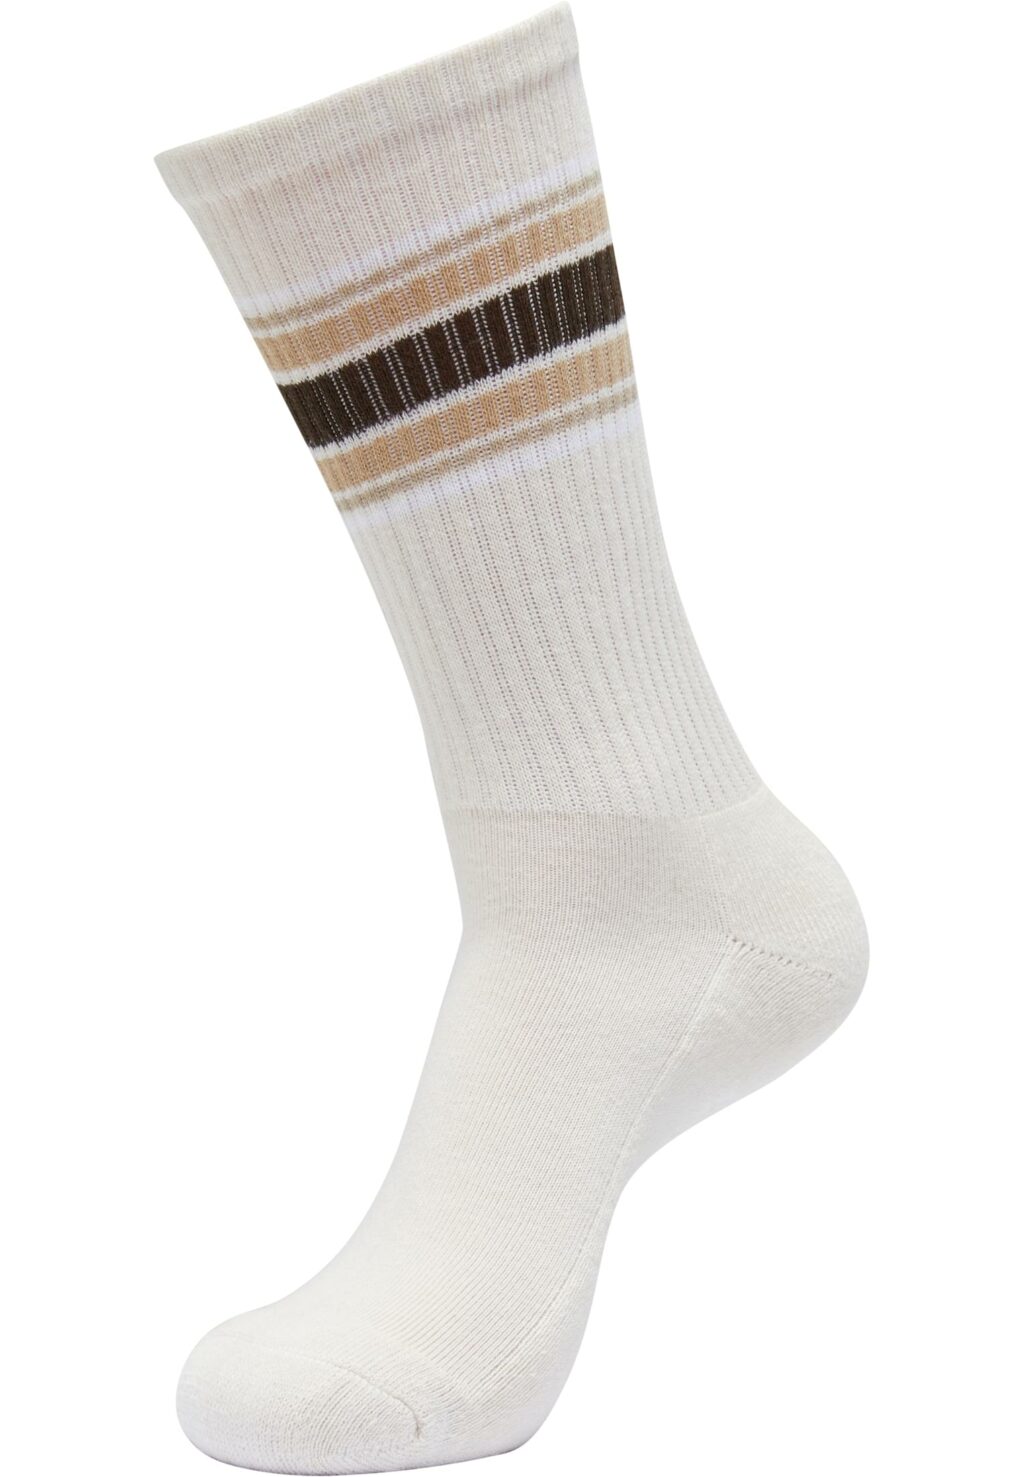 Layering Stripe Socks 4-Pack white/whitesand/tiniolive/unionbeige TB6536